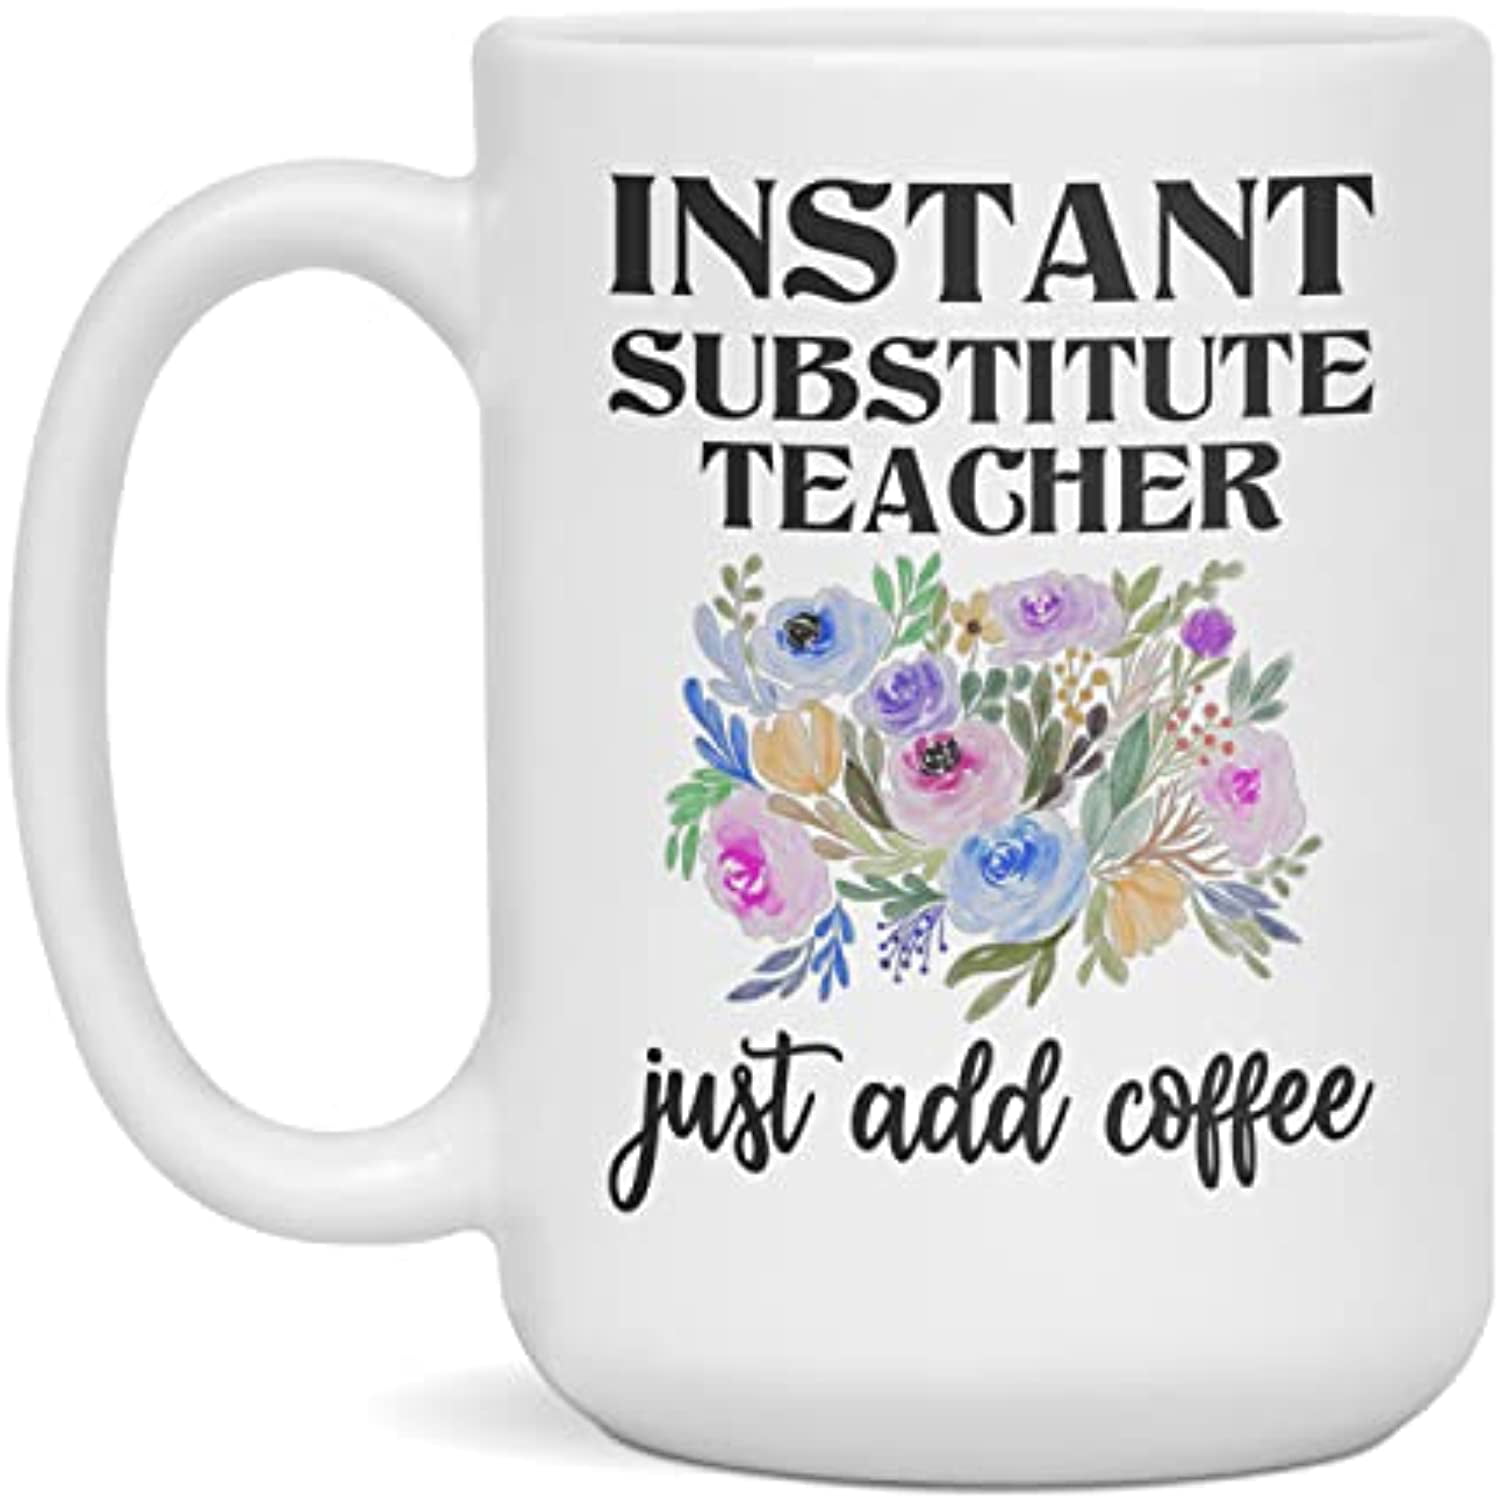 I'm a Teacher Not a Babysitter, Funny Teacher Svg, Amuse Sublimation Mugs  11 Oz, Mauag Funny Coffee Mug Gifts 